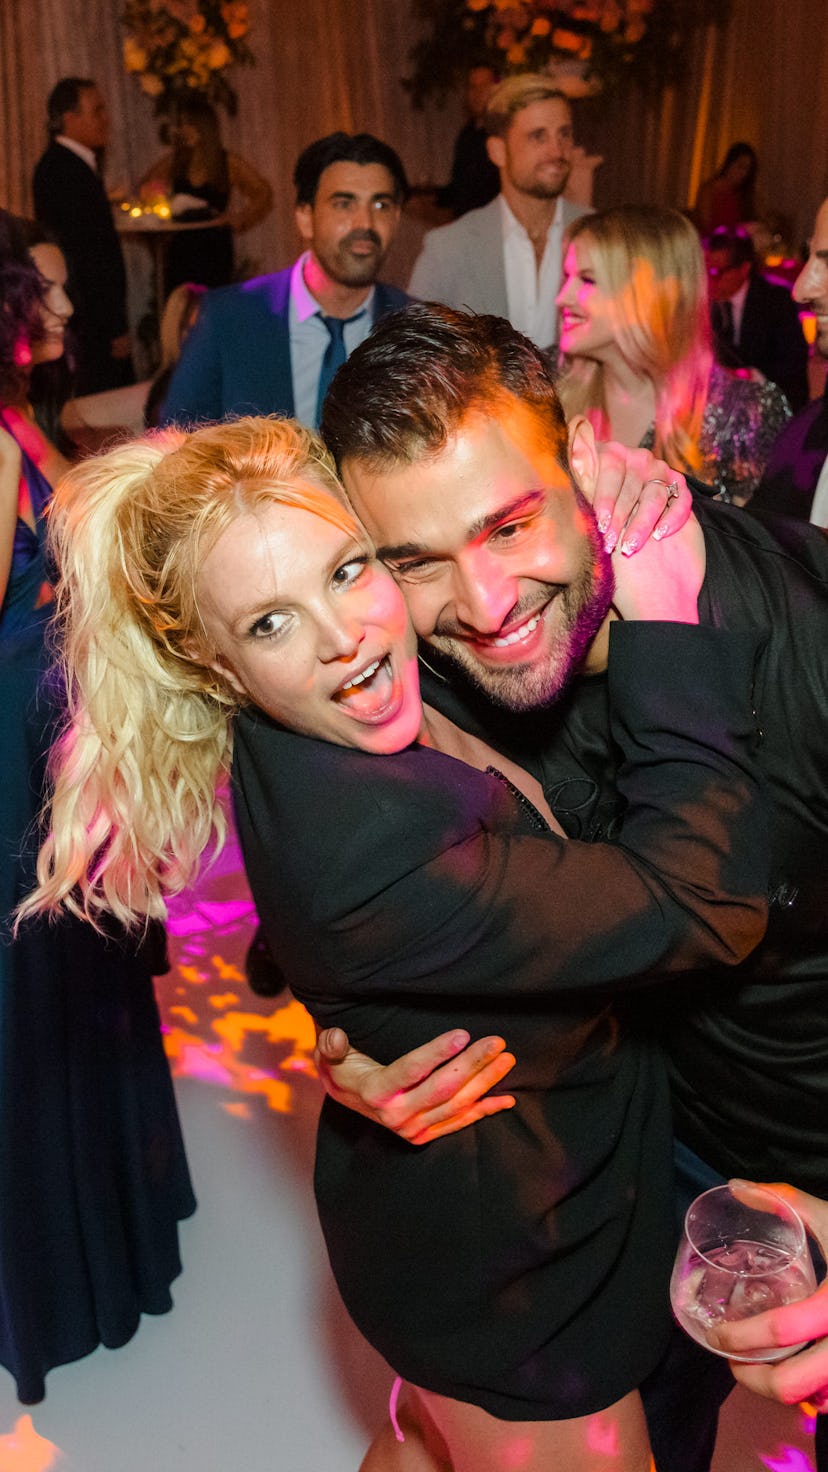 Britney Spears and Sam Asghari's wedding took place June 9. Photo via Shutterstock